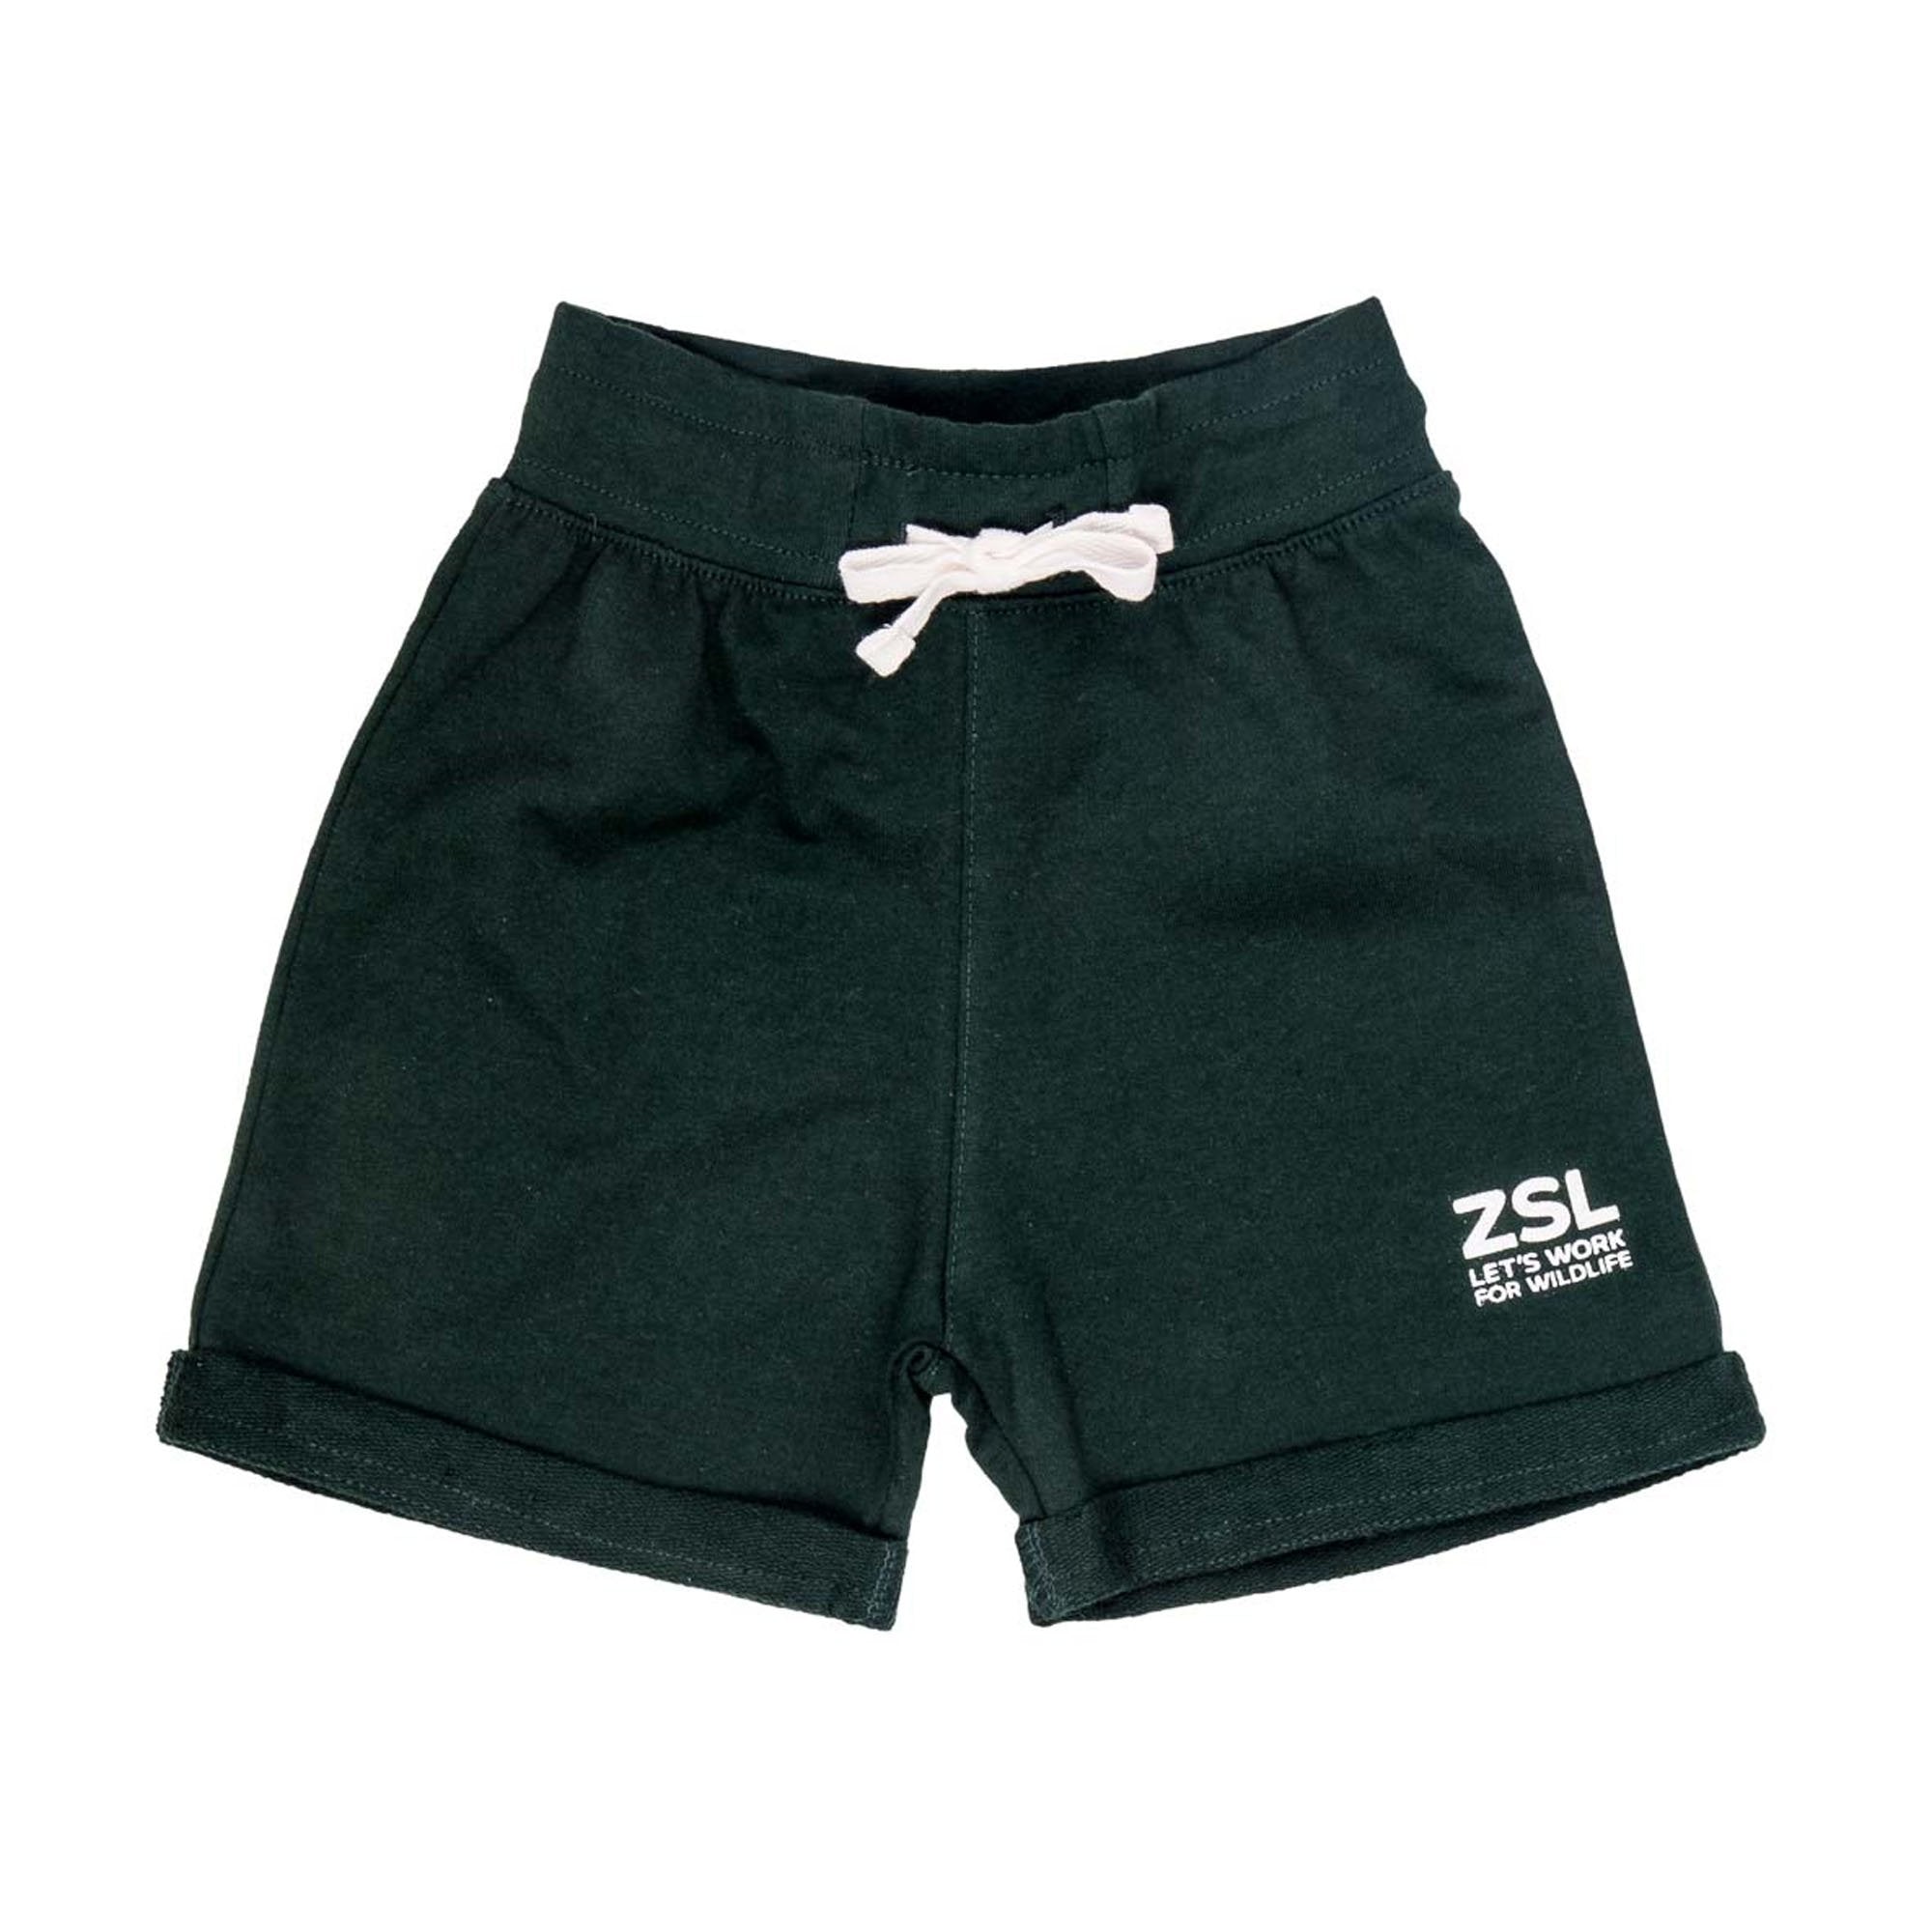 Junior Zoo Keeper shorts